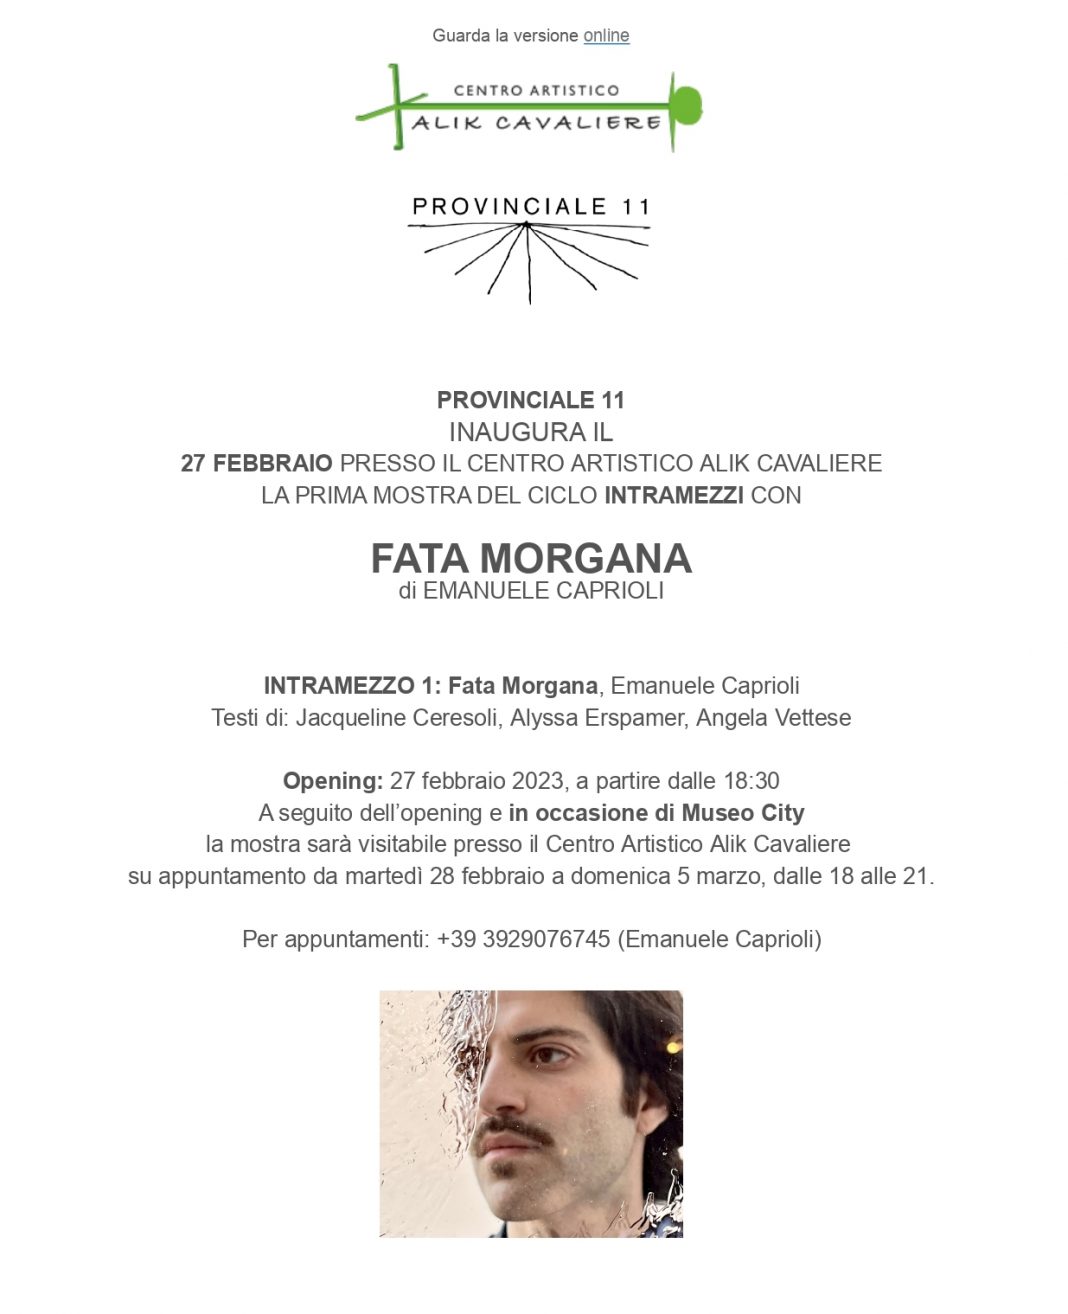 Emanuele Caprioli – INTRAMEZZO 1: Fata Morganahttps://www.exibart.com/repository/media/formidable/11/img/a34/Intramezzo-1-Fata-Morgana_page-0001-1068x1314.jpg